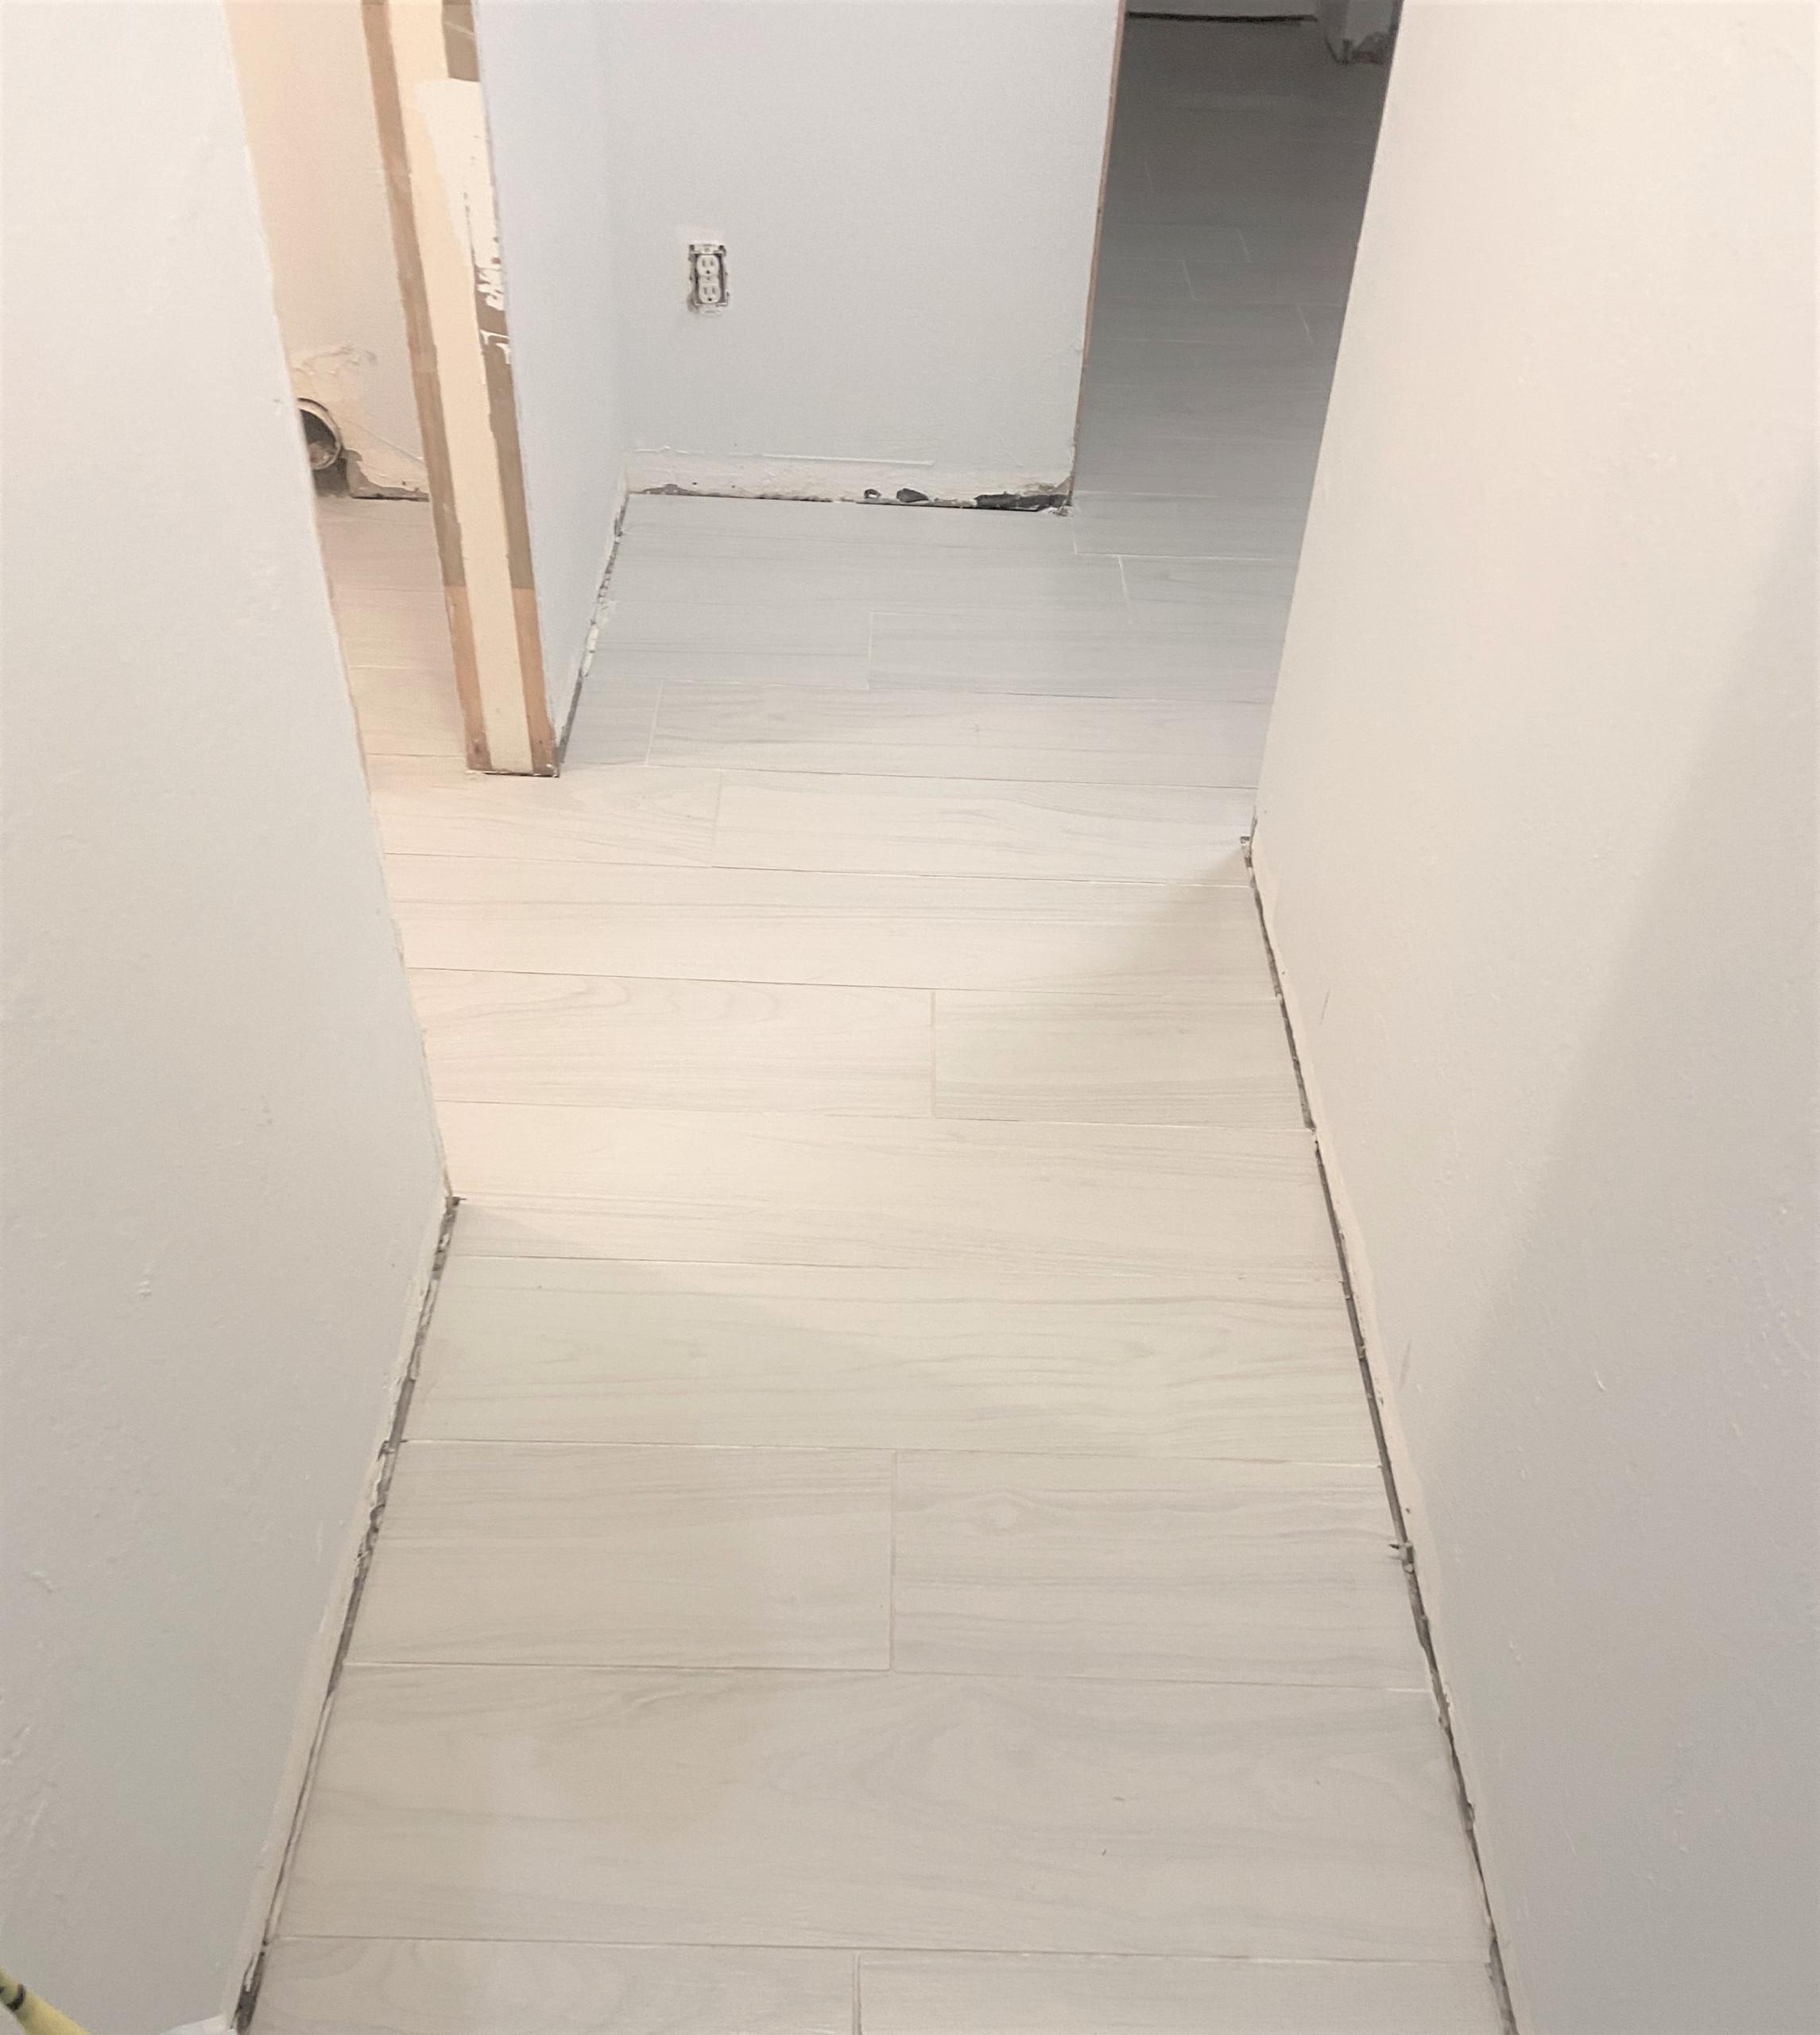 Large plank tile